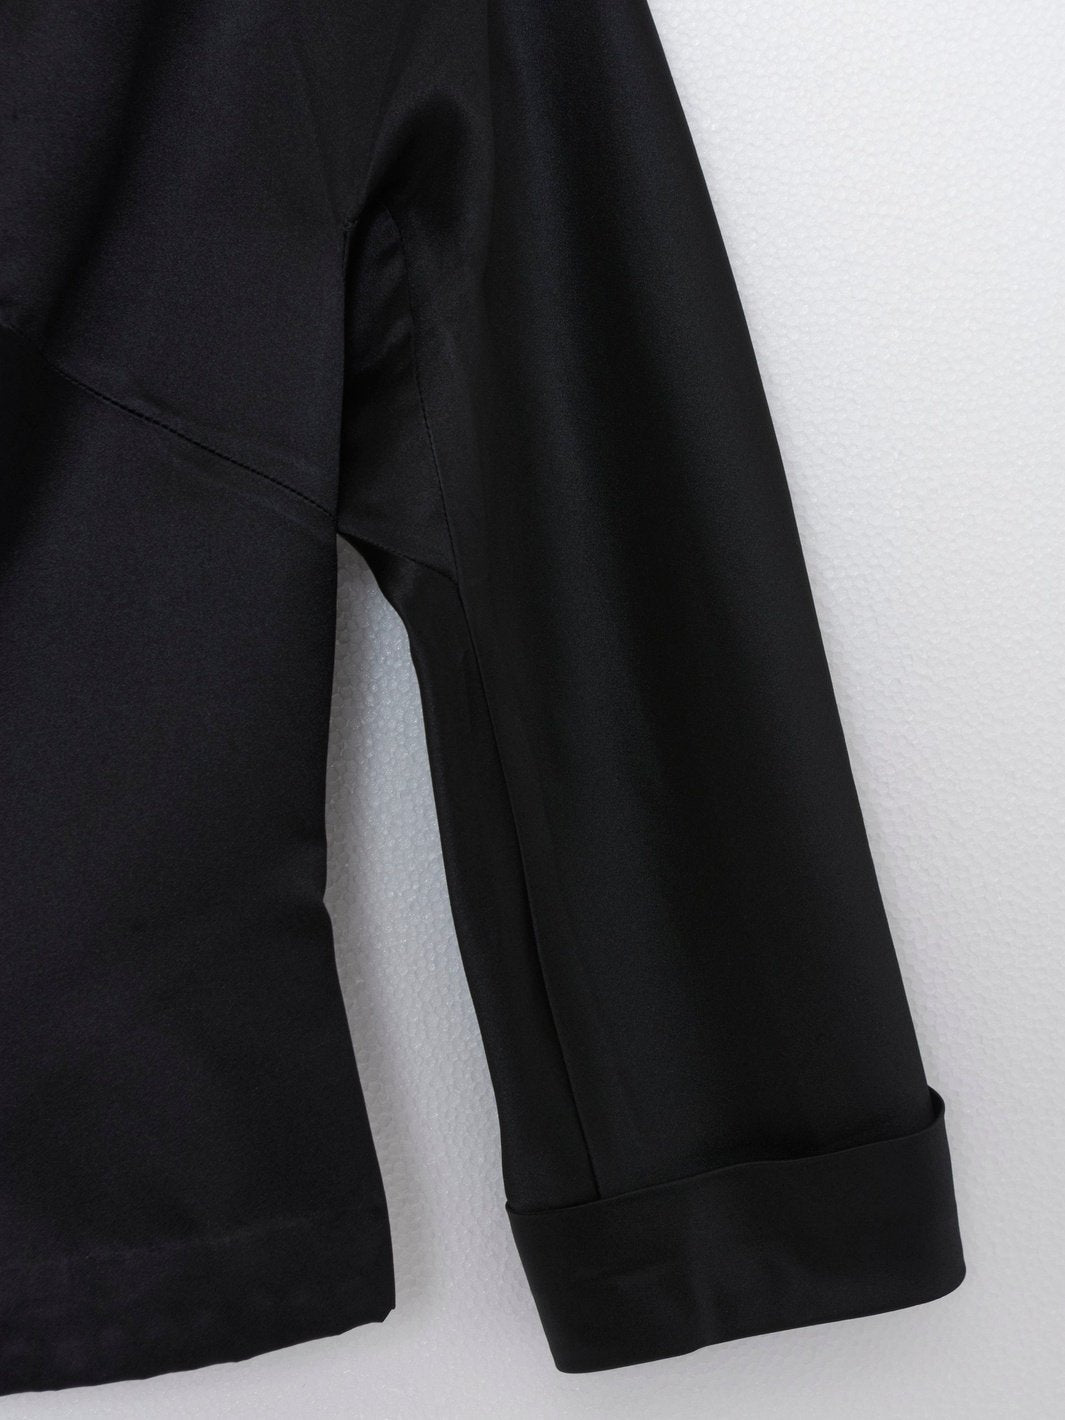 1980s black tailored silk suit